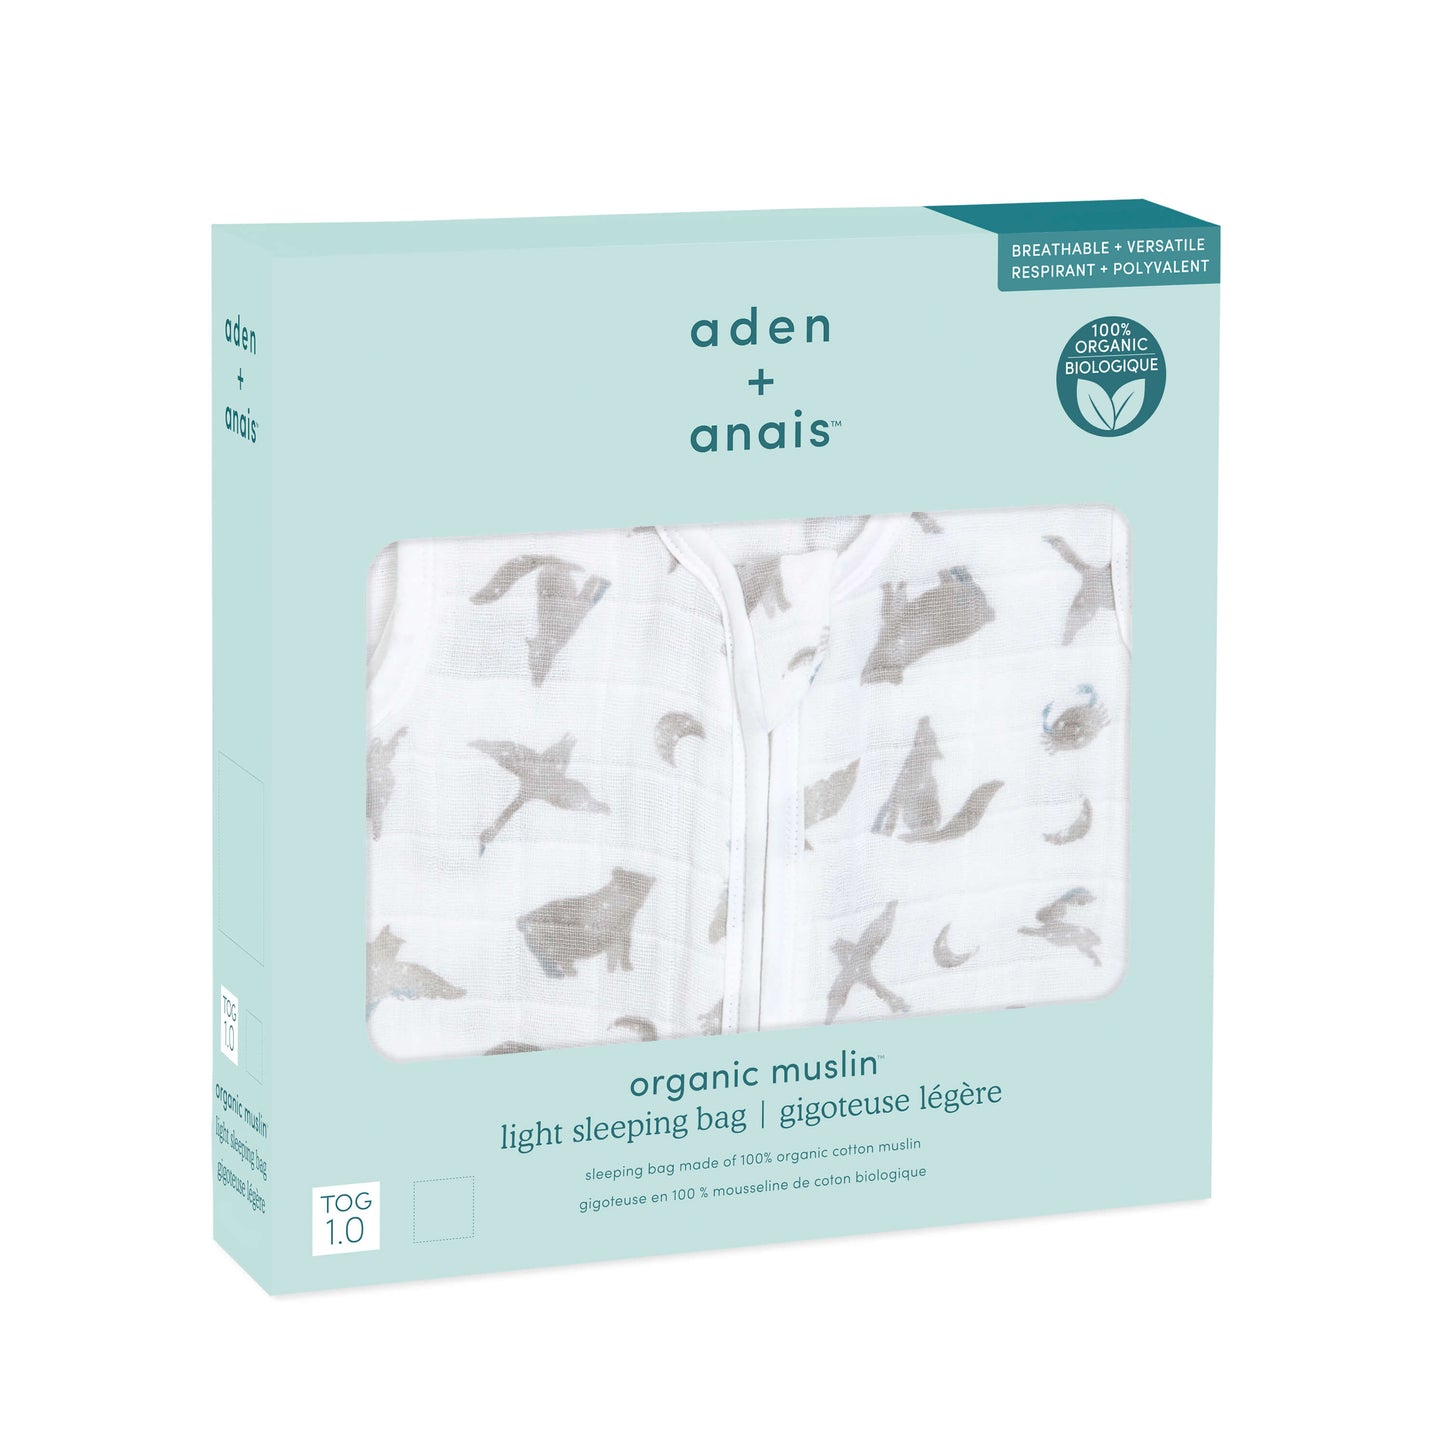 aden + anais Organic Cotton Light Sleeping Bag - 1.0 Tog (Map the Stars)